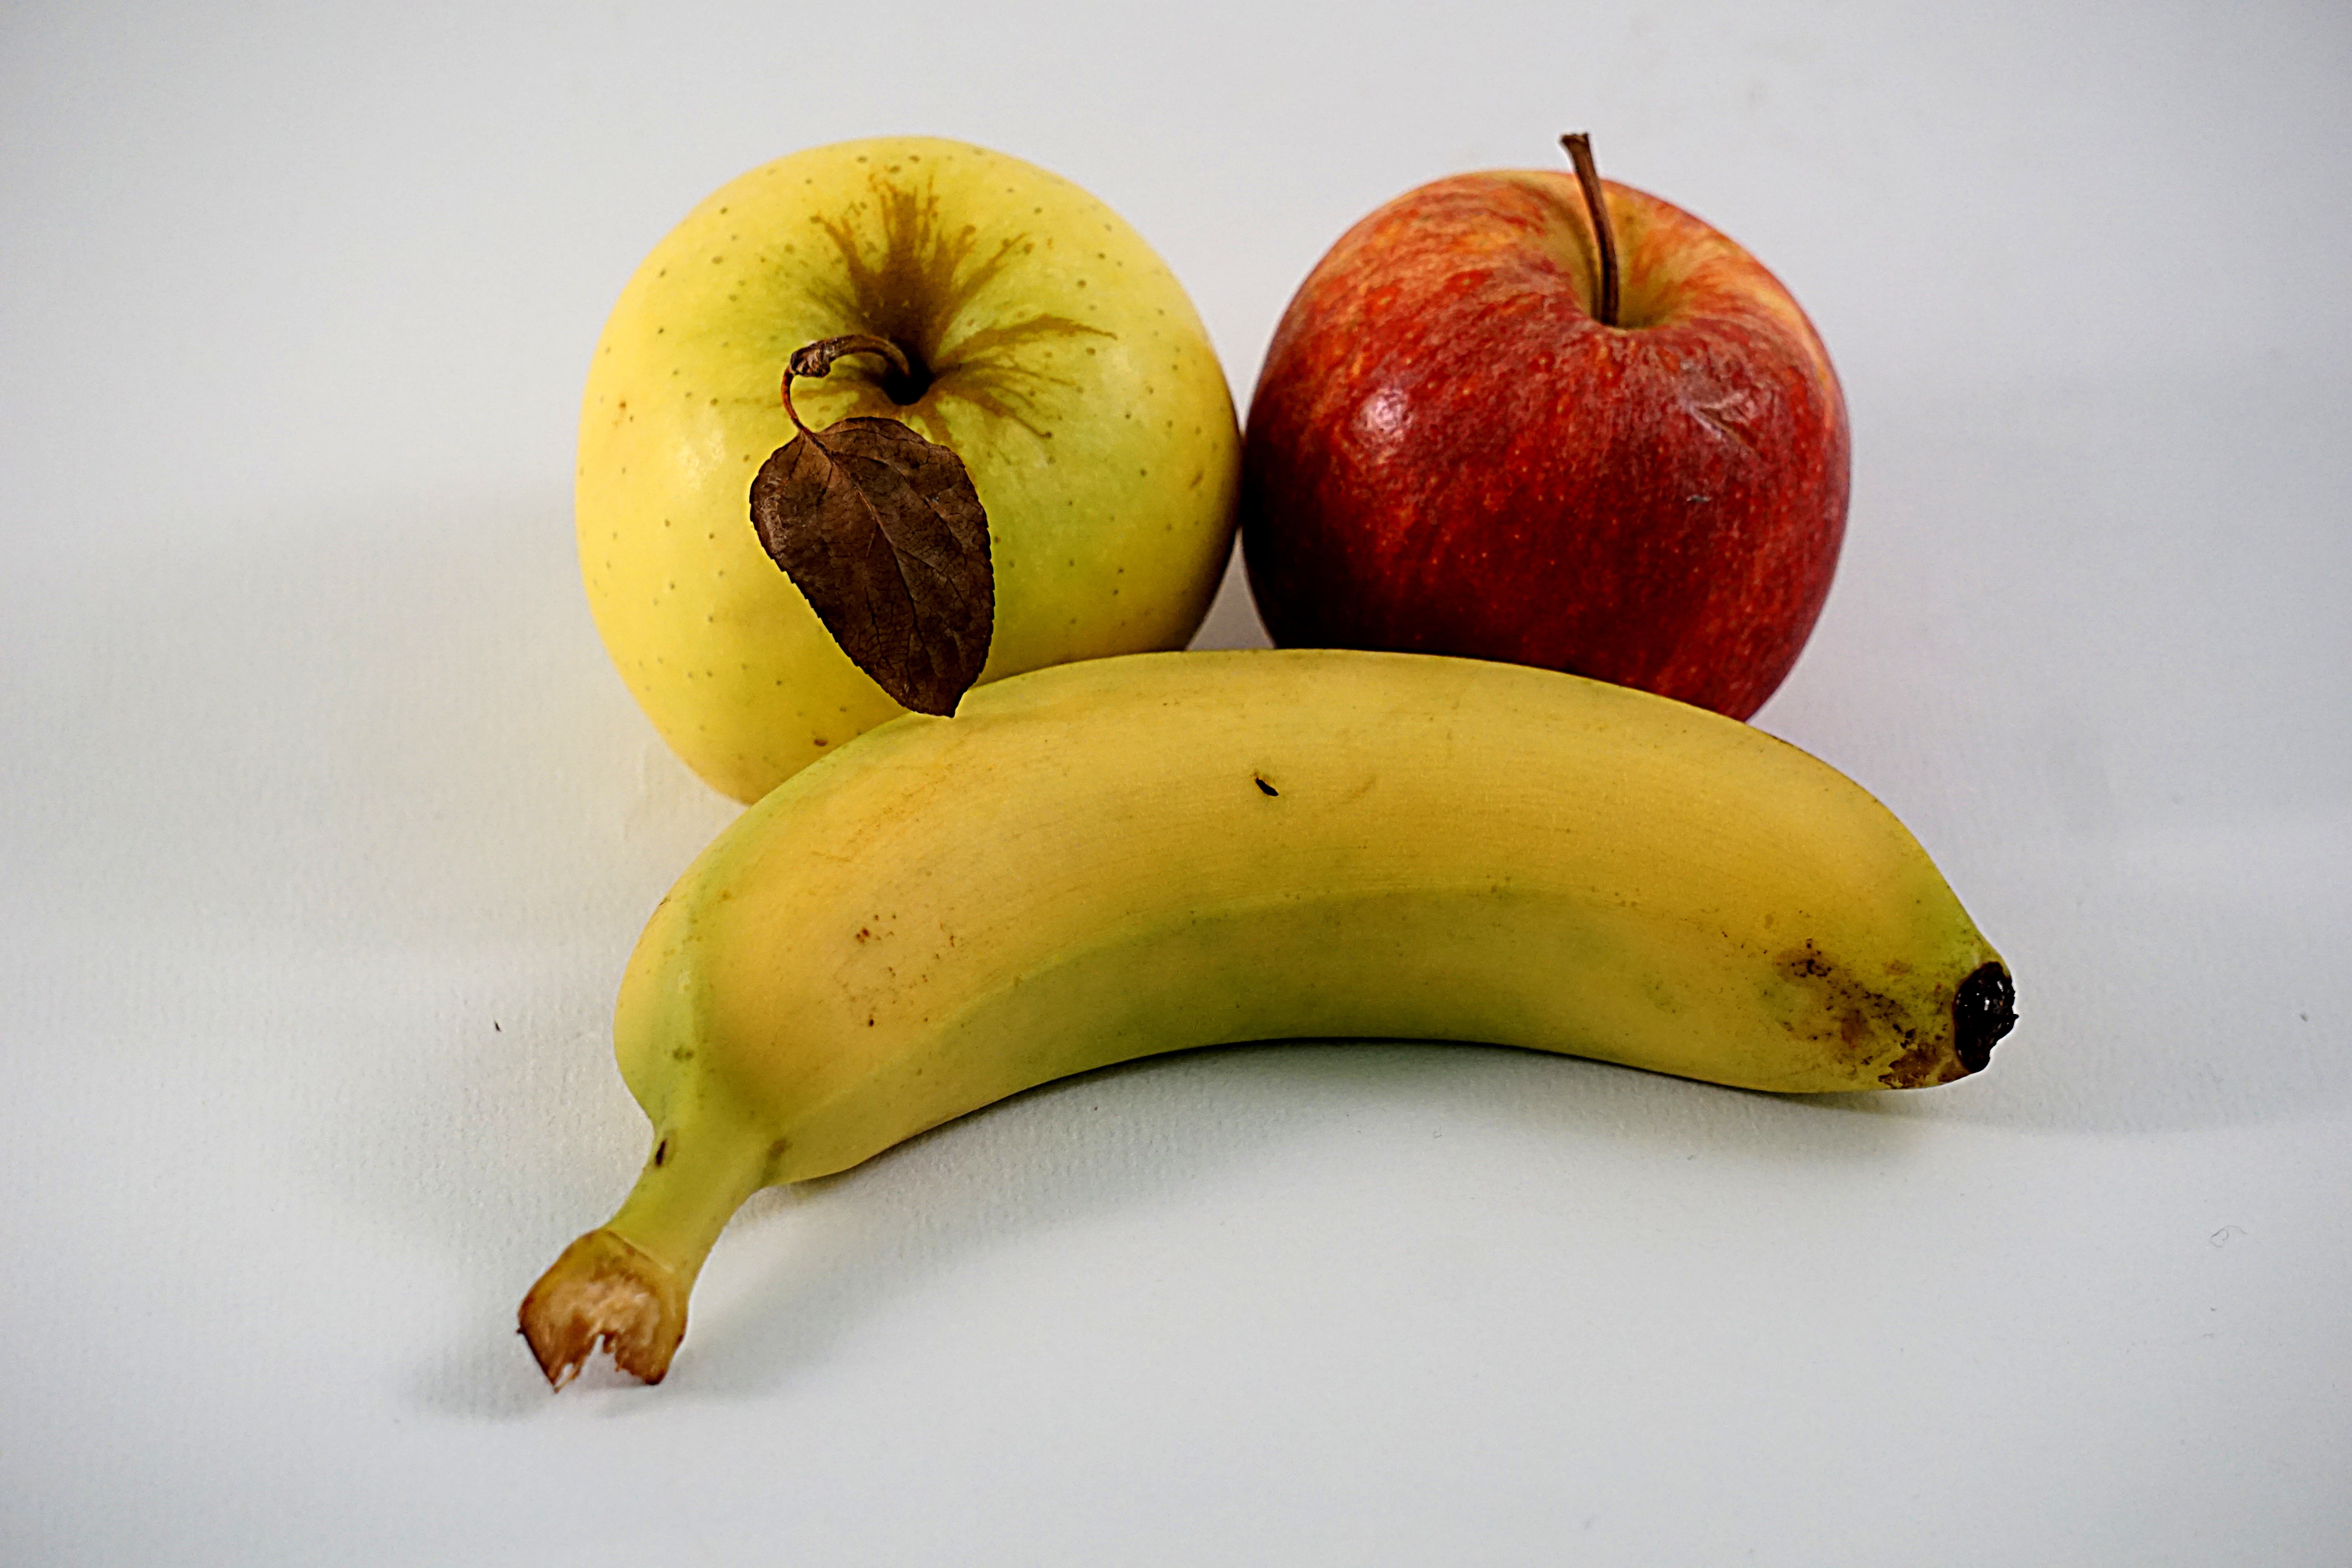 2560x1440 Wallpaper Yellow Banana And Red Apple Fruit Peakpx